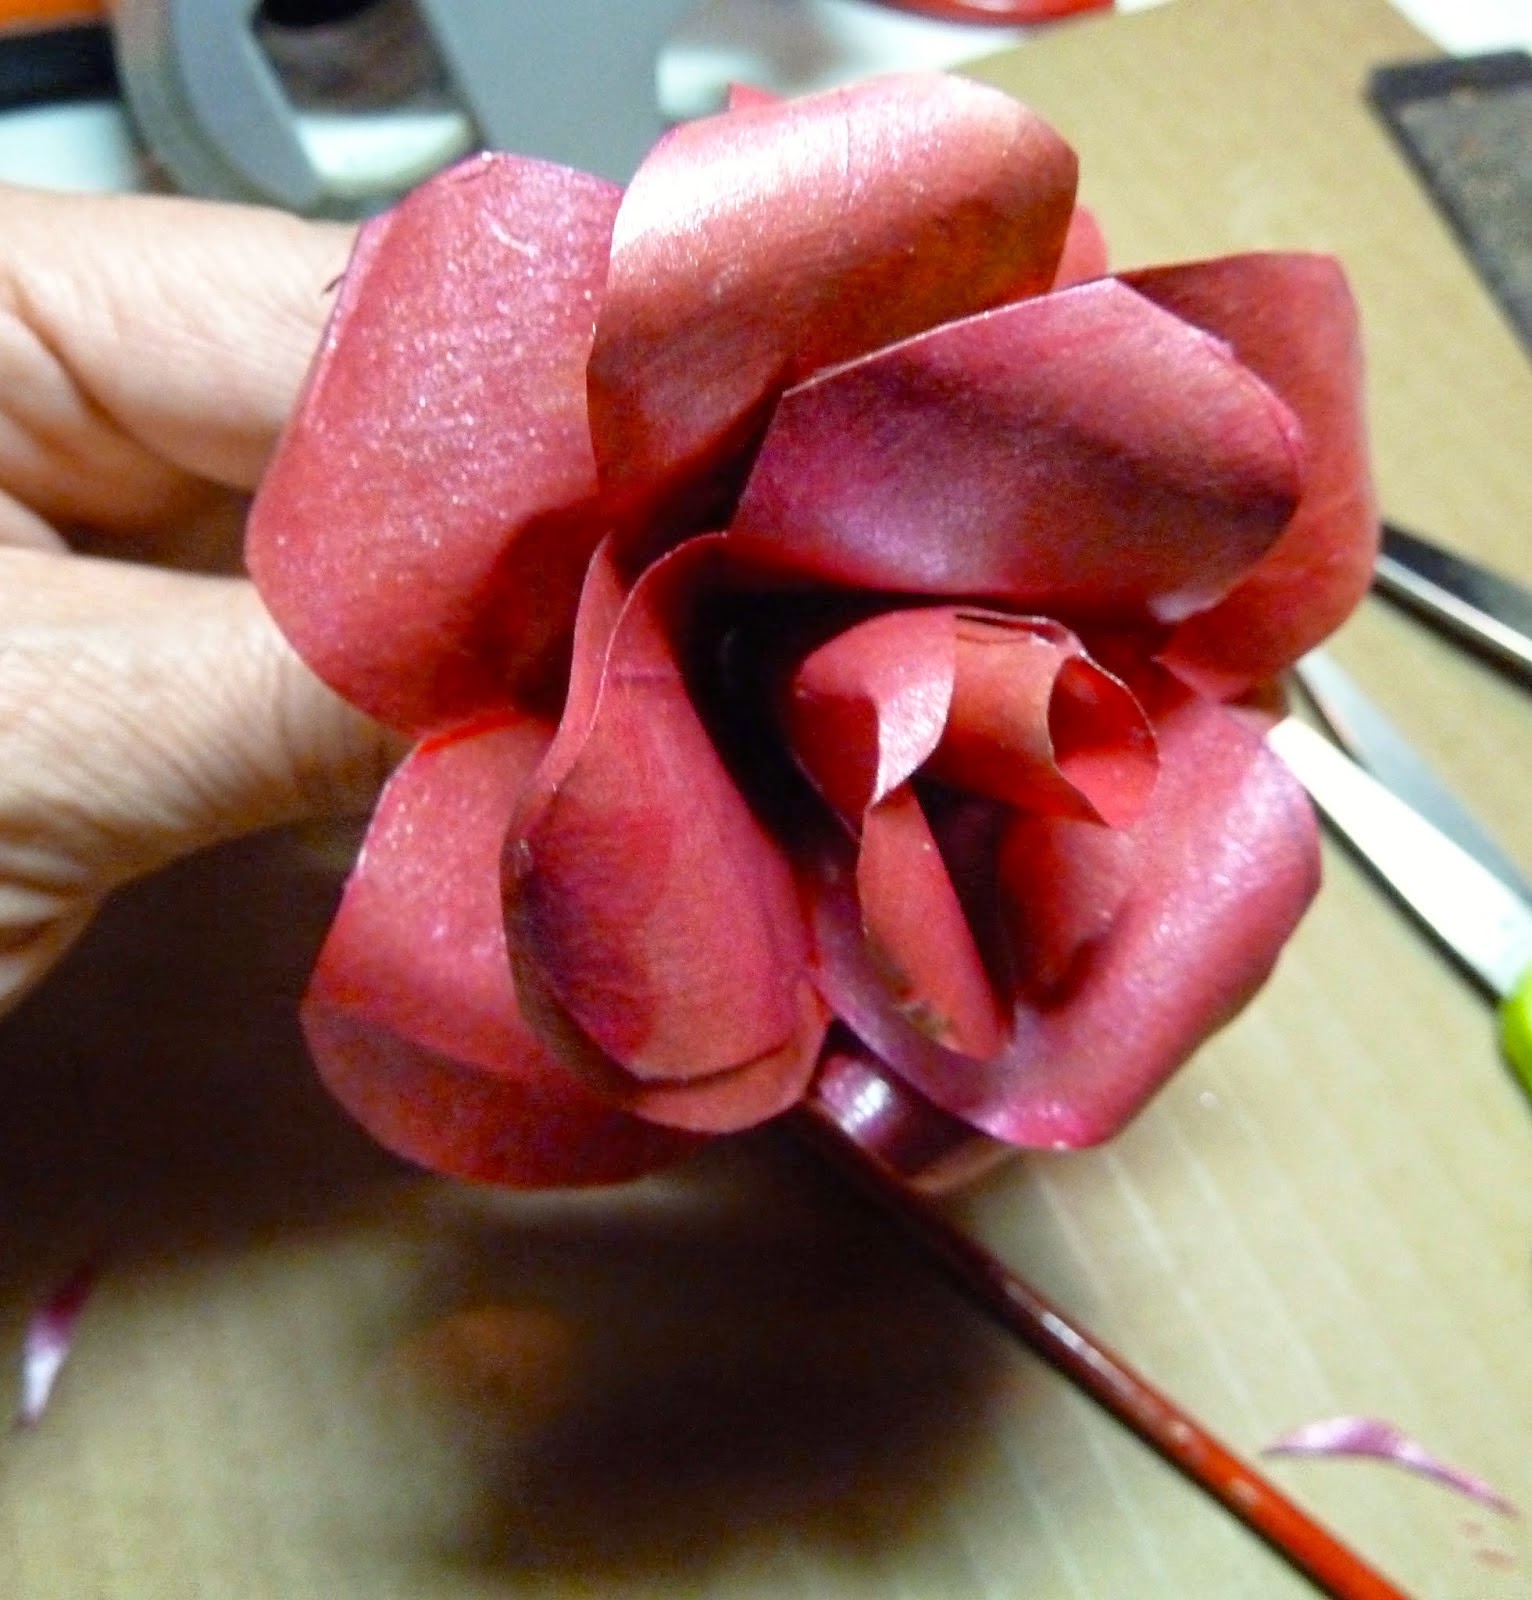 http://www.makeiteasycrafts.com/2014/04/recycled-brown-paper-bag-rose-pens.html